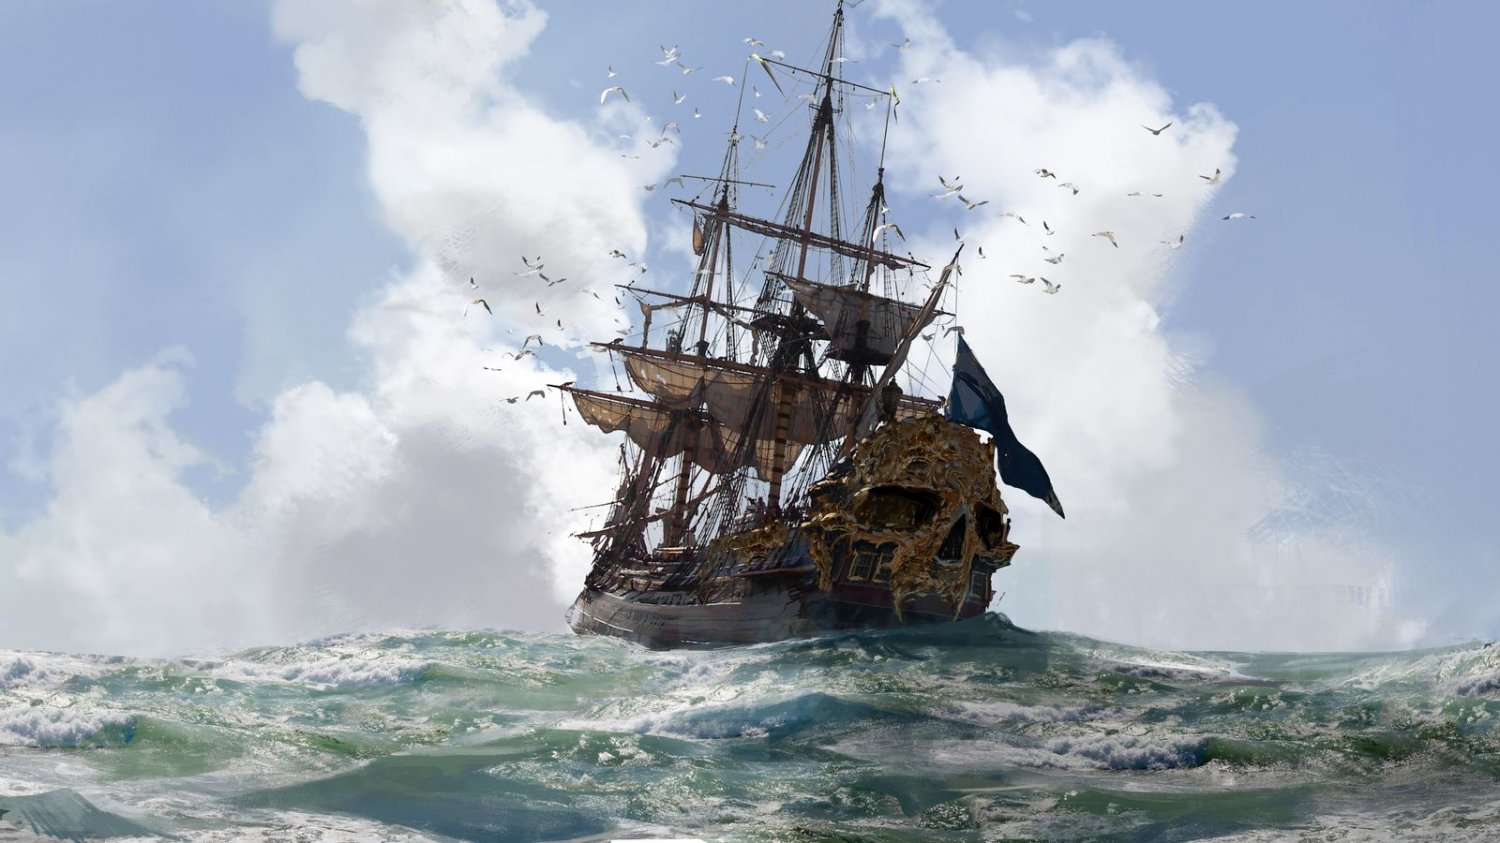 Skull and Bones Pirate Ship Game 18"x28" (45cm/70cm) Canvas Print